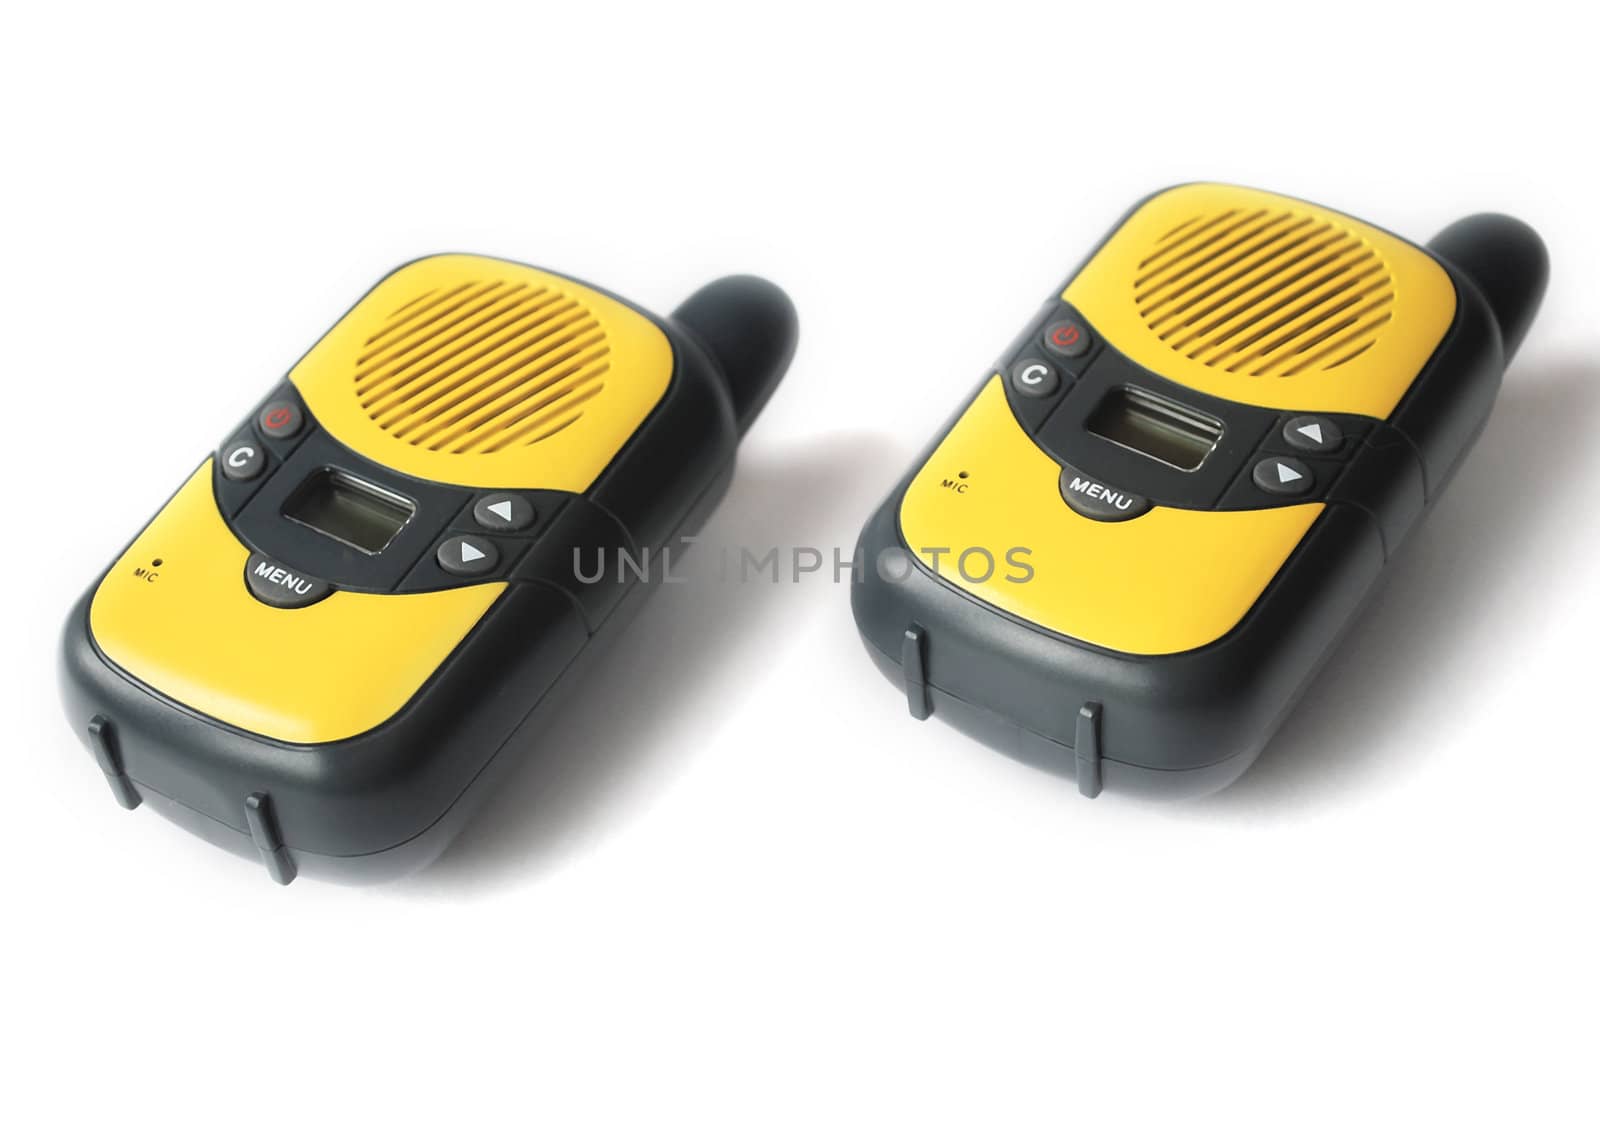 walkie talkie on white background  - two portable transmitter 